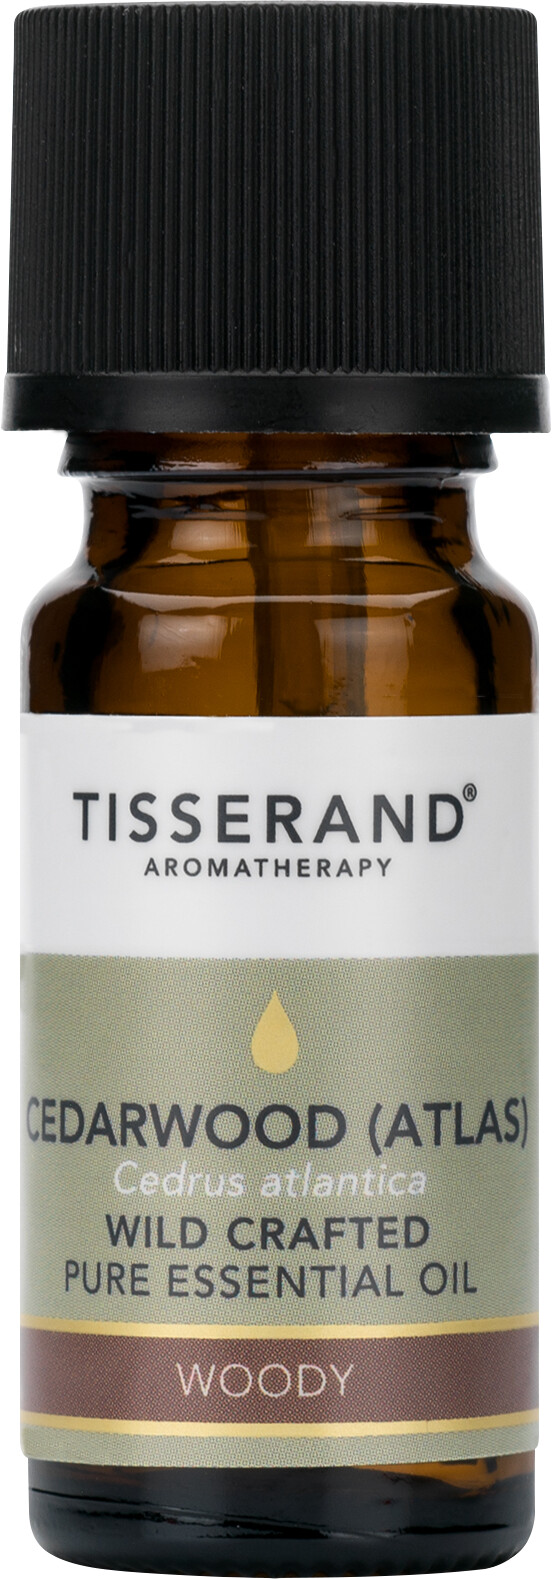 Tisserand Aromatherapy Cedarwood (Atlas) Wild Crafted Pure Essential Oil 9ml